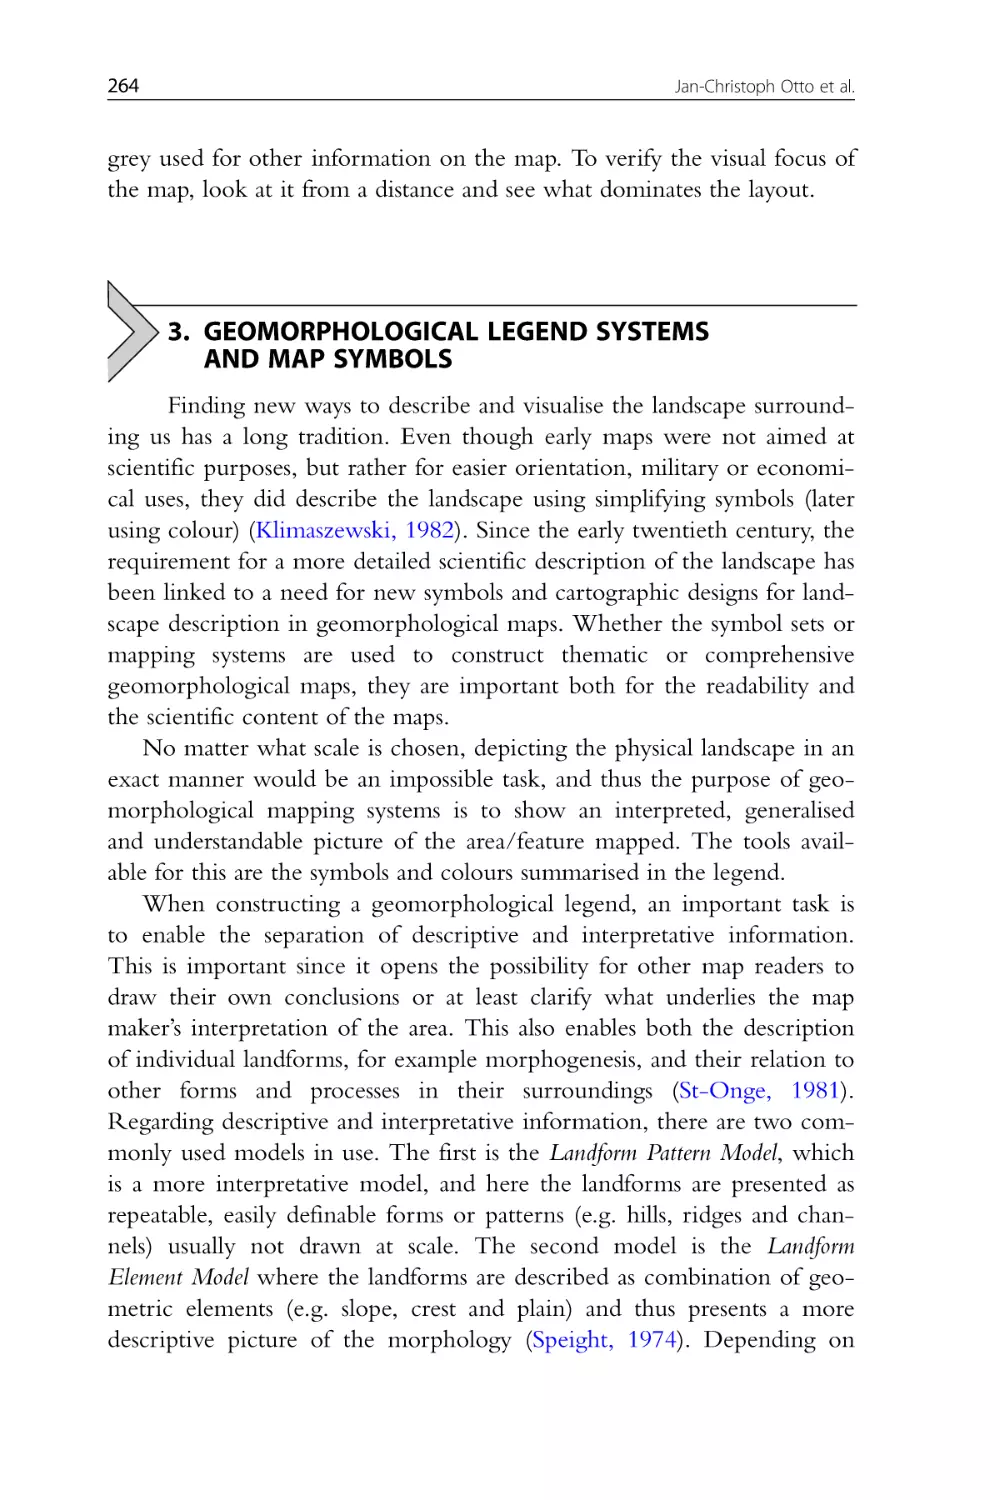 3. Geomorphological Legend Systems and Map Symbols